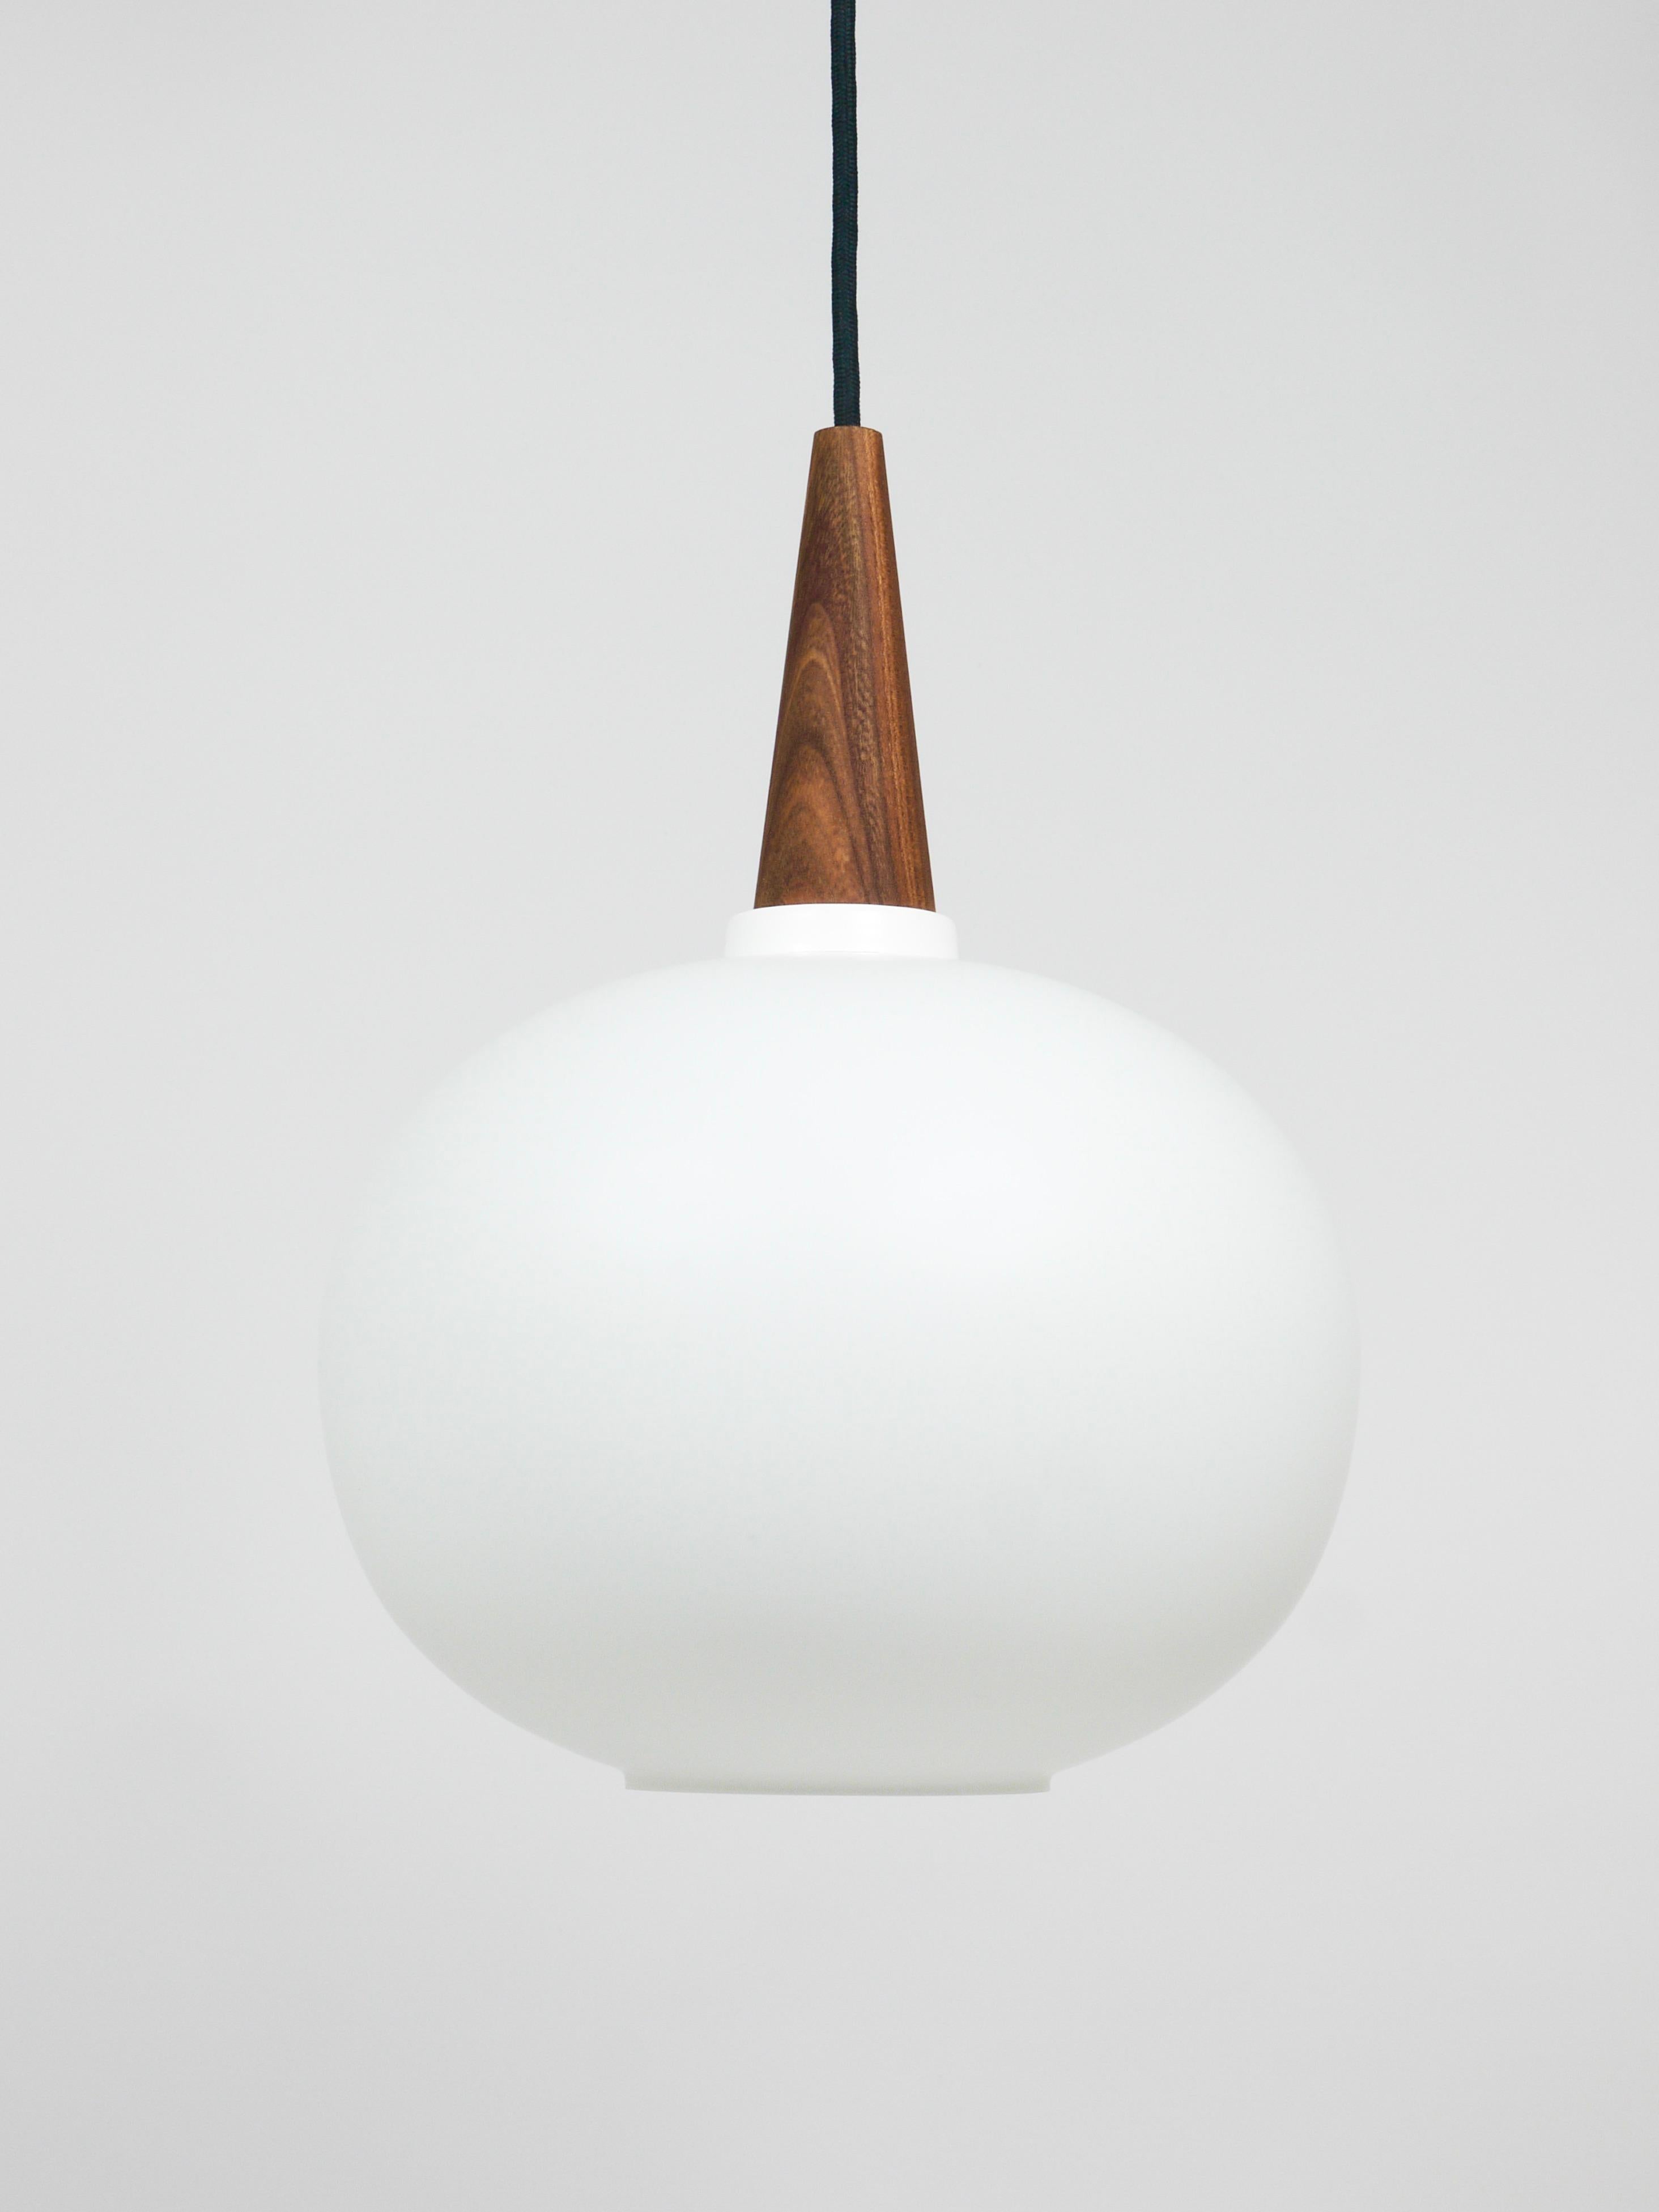 Louis Kalff Teak & Opaline Pendant Suspension Lamp, Philips, Netherlands For Sale 5